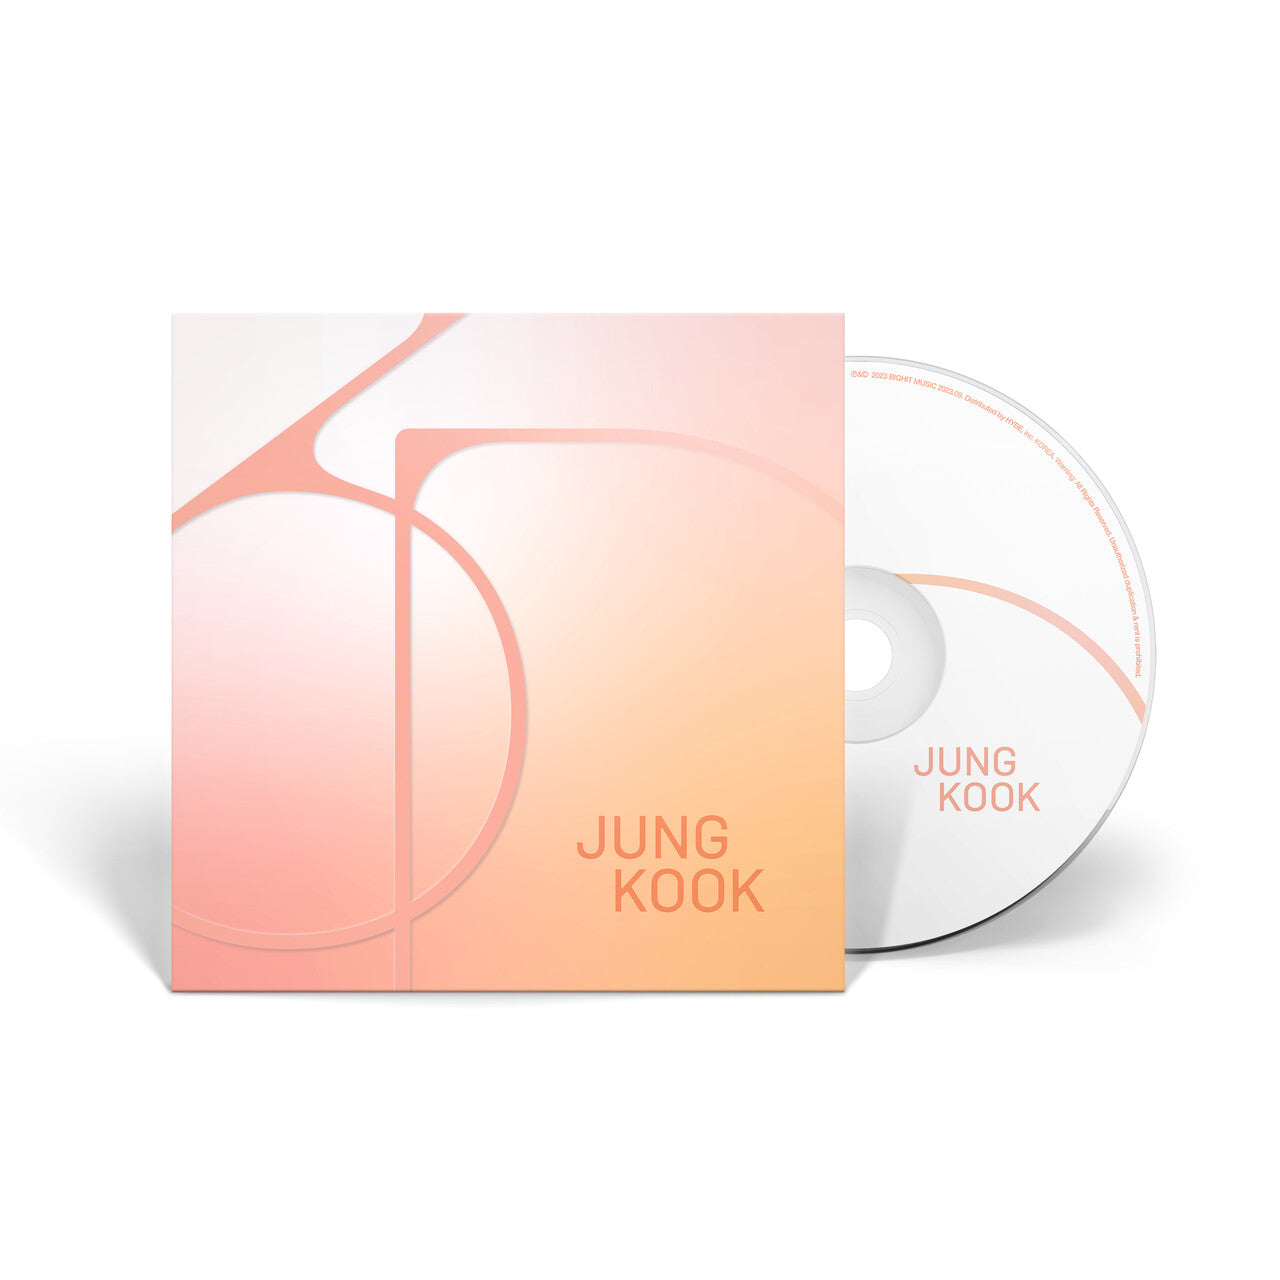 Jung Kook, Jack Harlow - 3D - Alternate Ver. Single CD